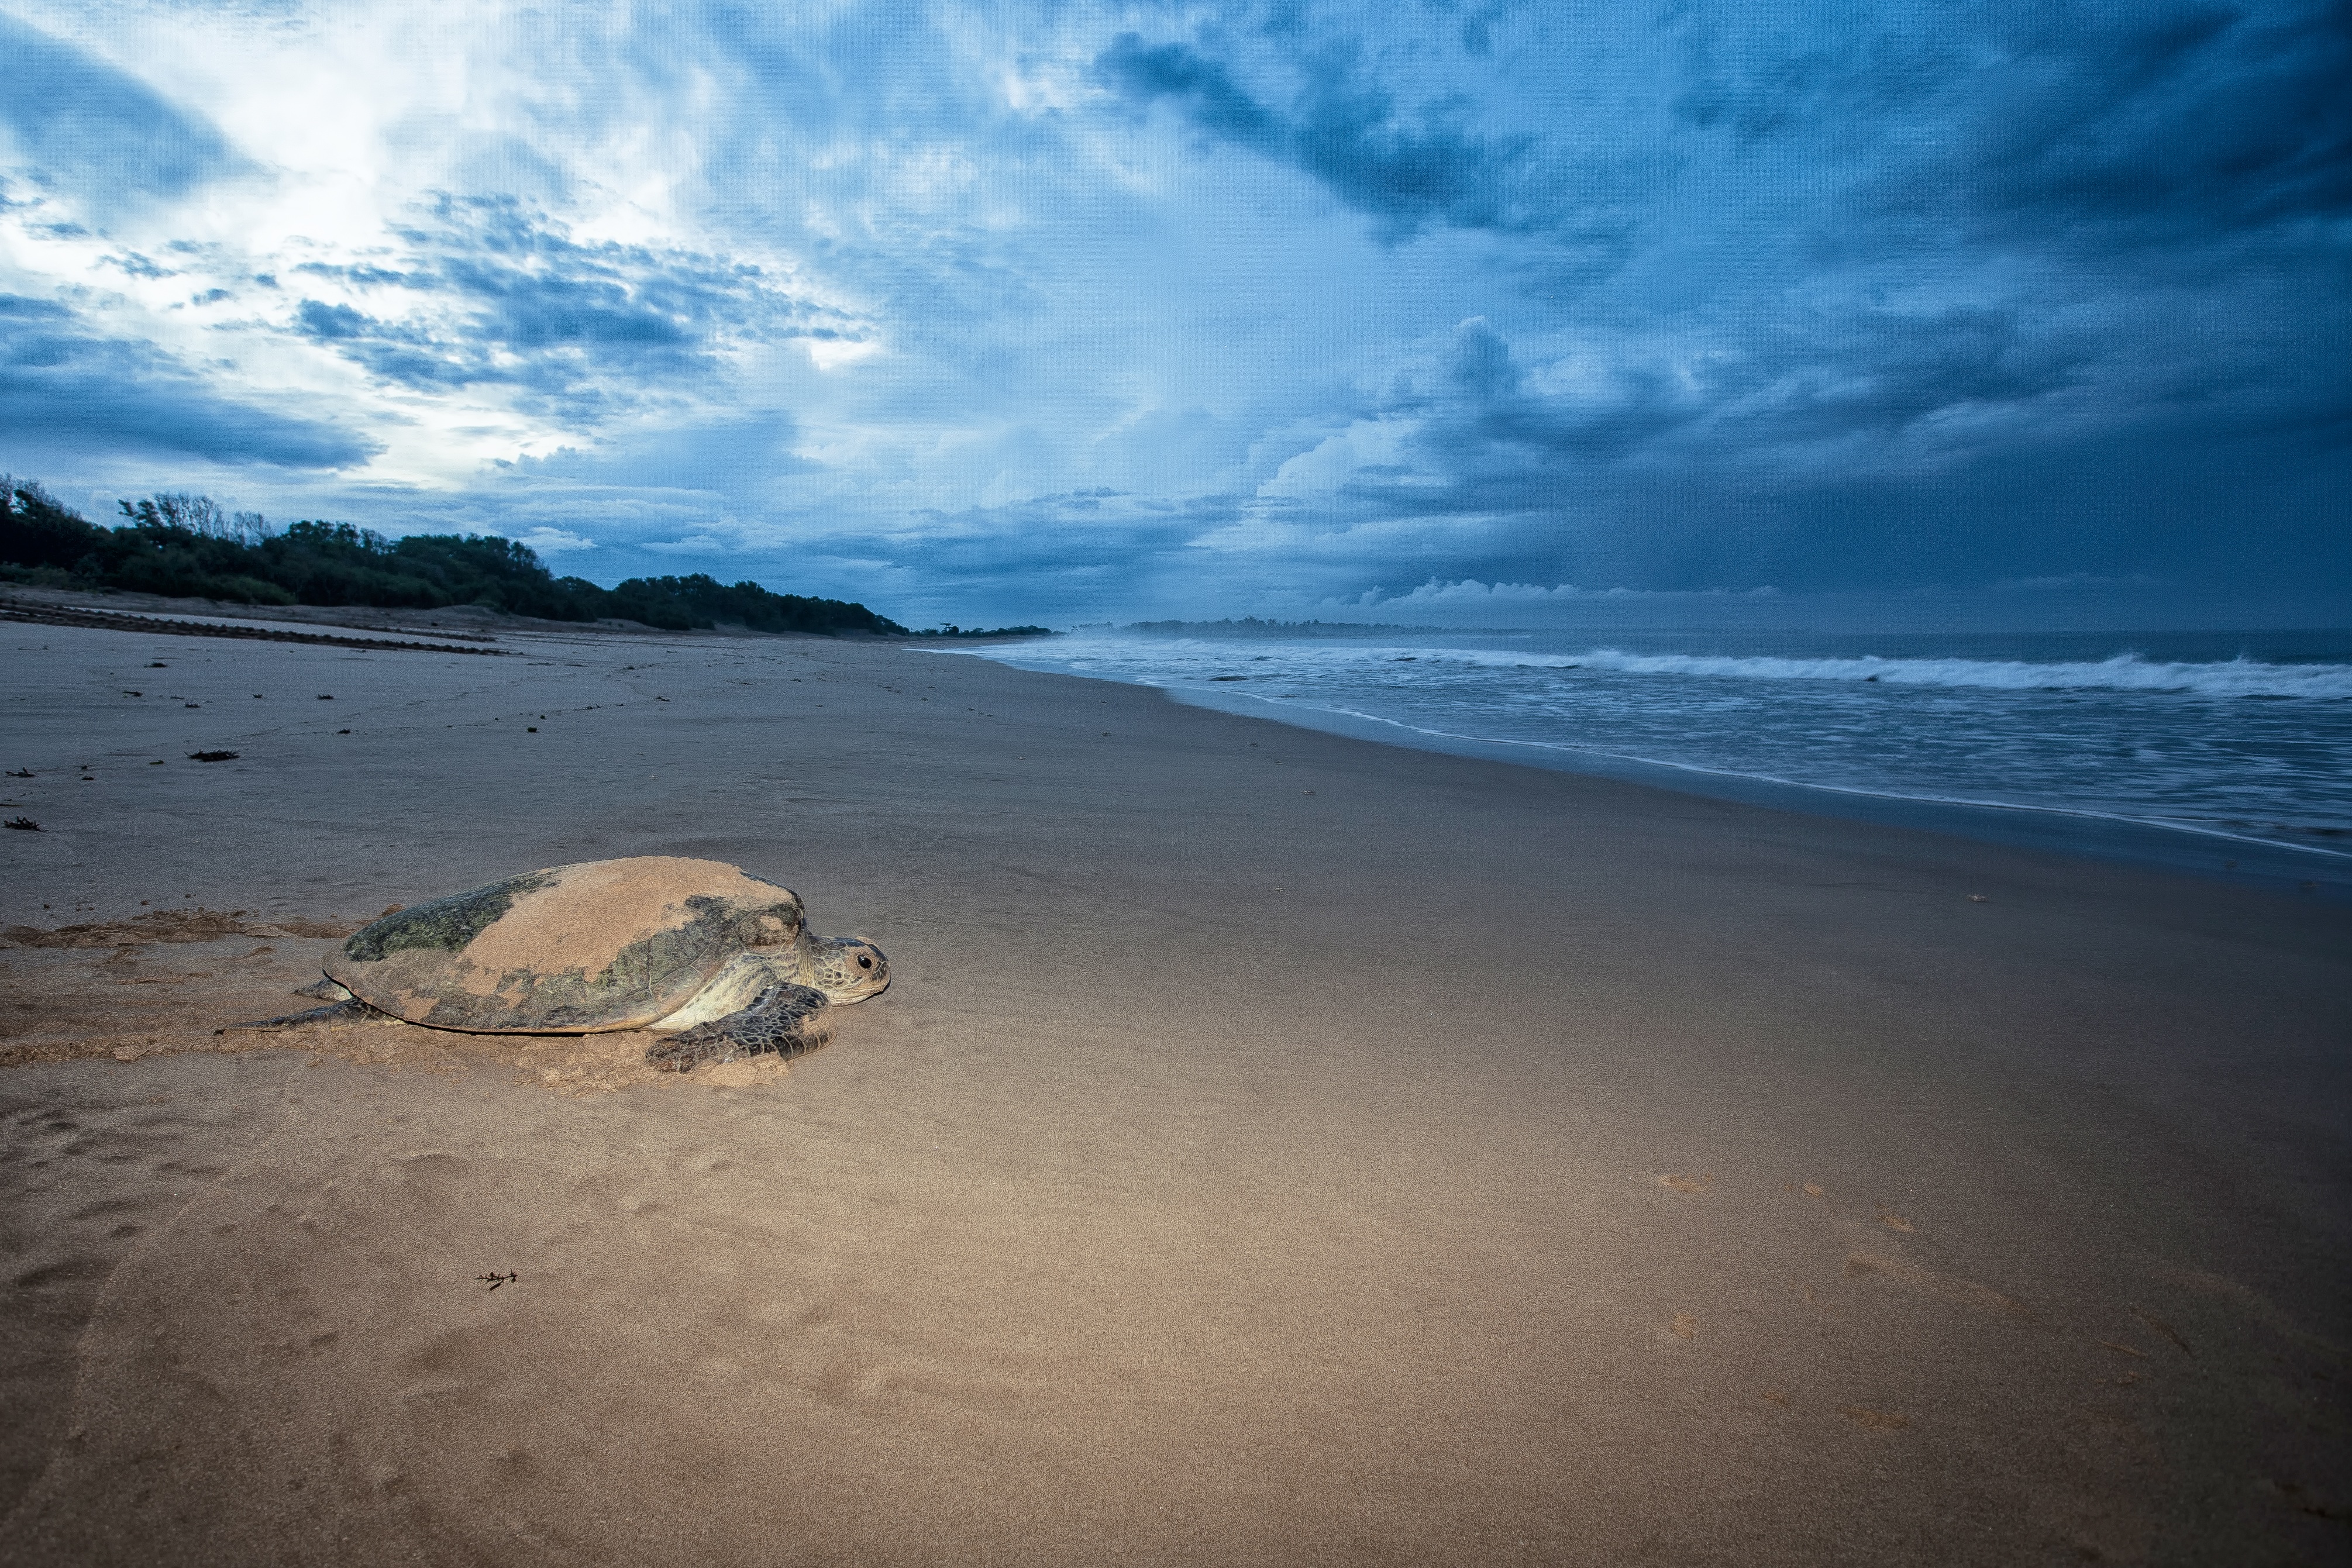 Turtle on the Beach, Animal, Beach, Island, Nature, HQ Photo